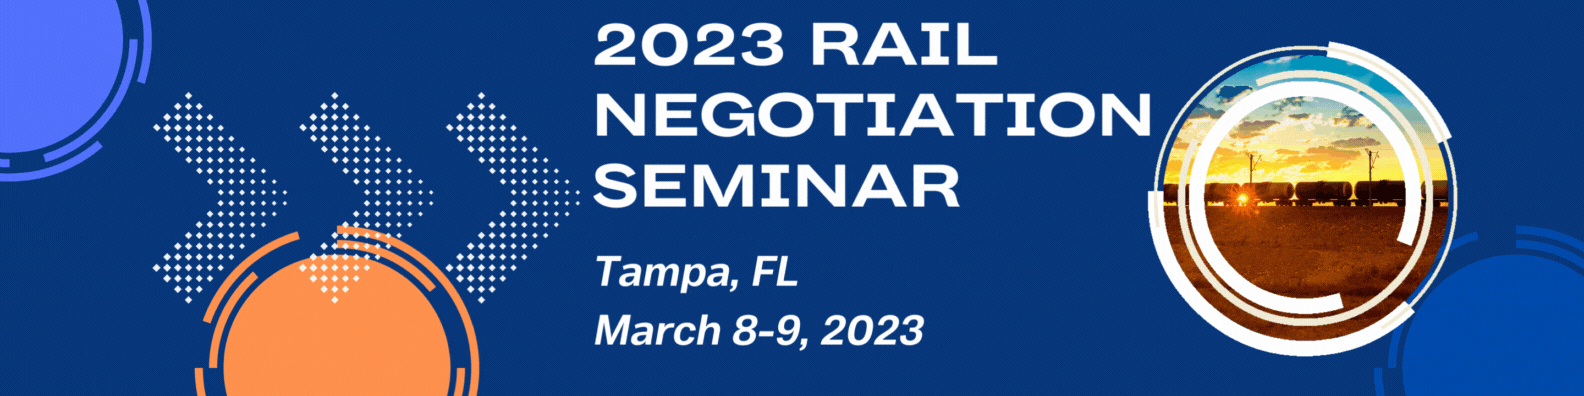 2023 Rail Negotiation Seminar Hero Banner